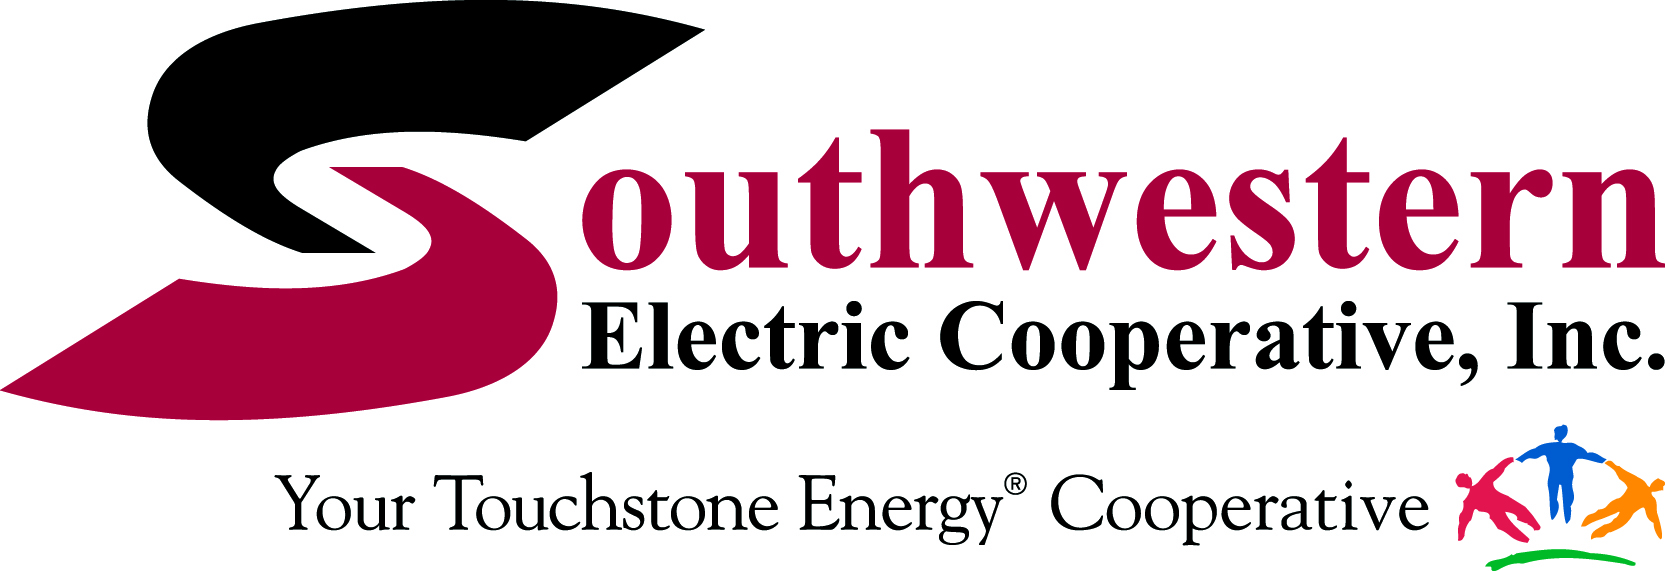 Southwestern Electric Cooperative, Inc. Logo